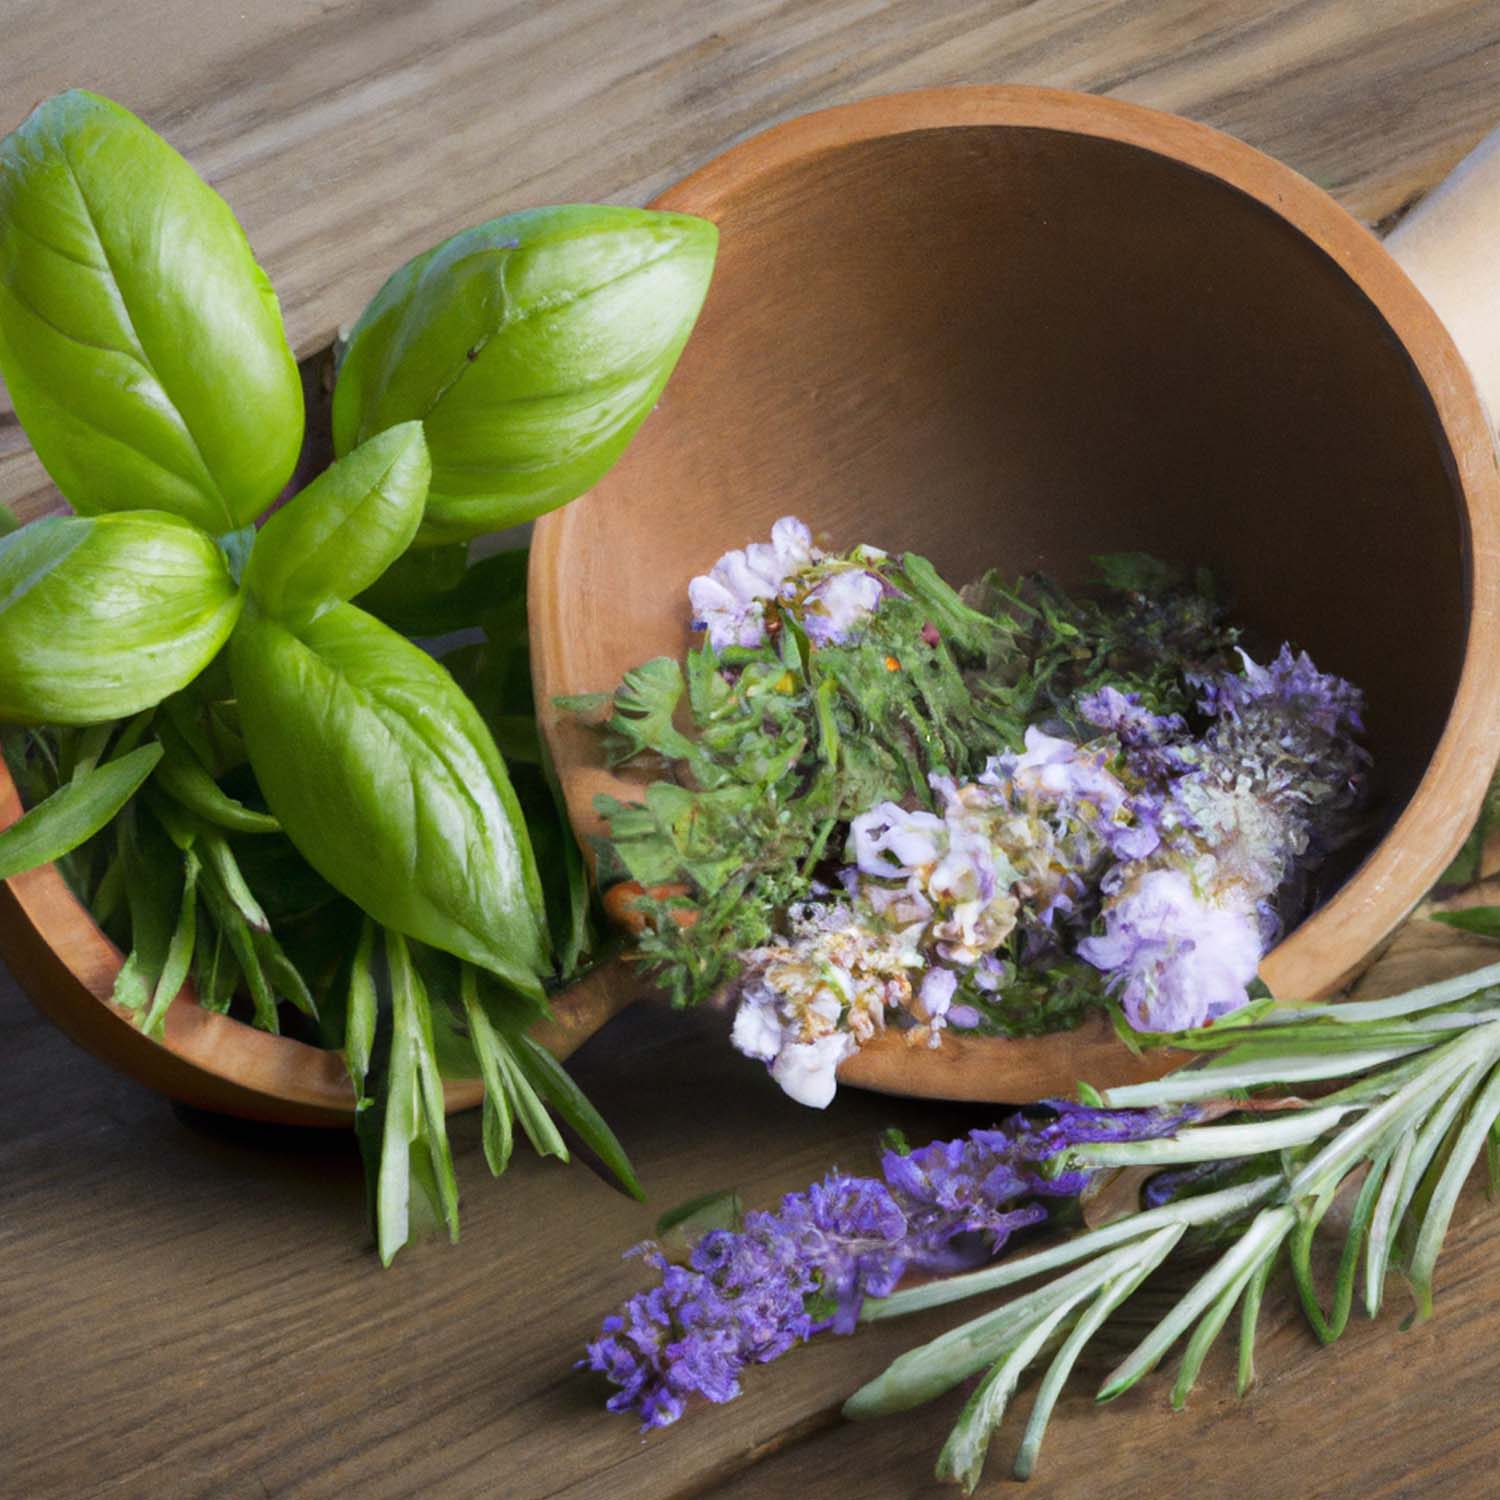 Herbal Medicine and Wellness